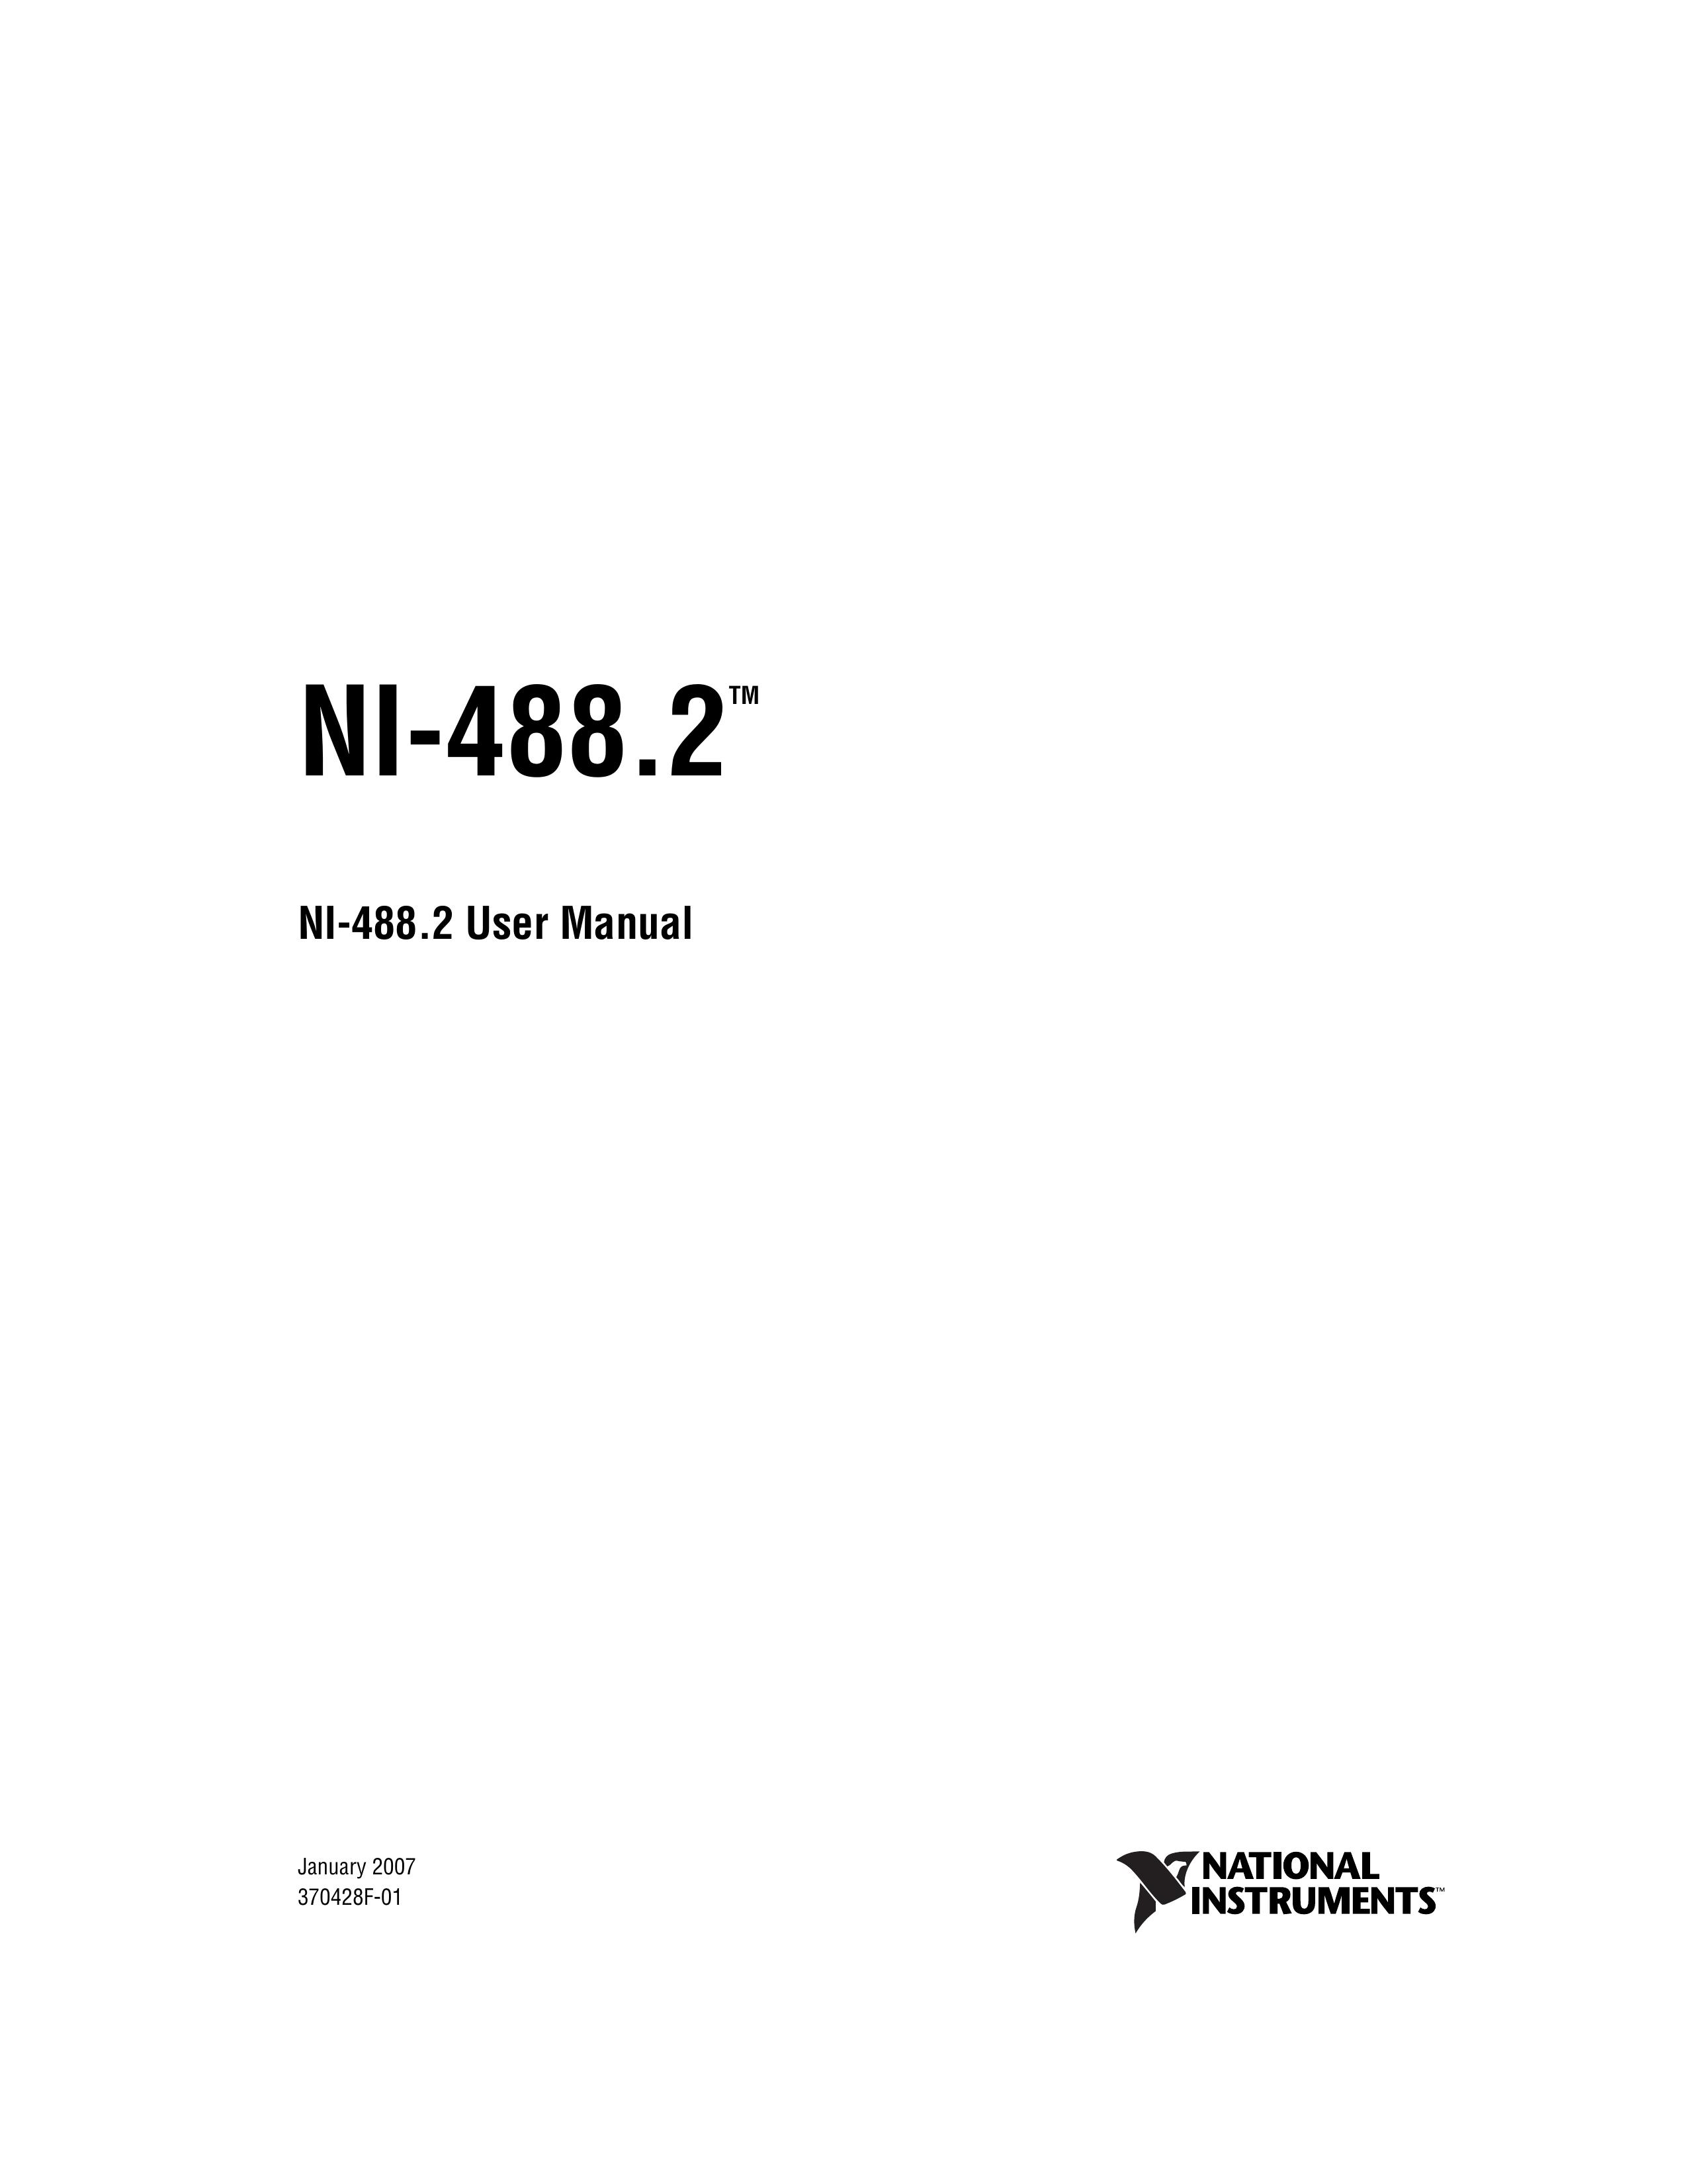 National Instruments NI-488.2 Refrigerator User Manual